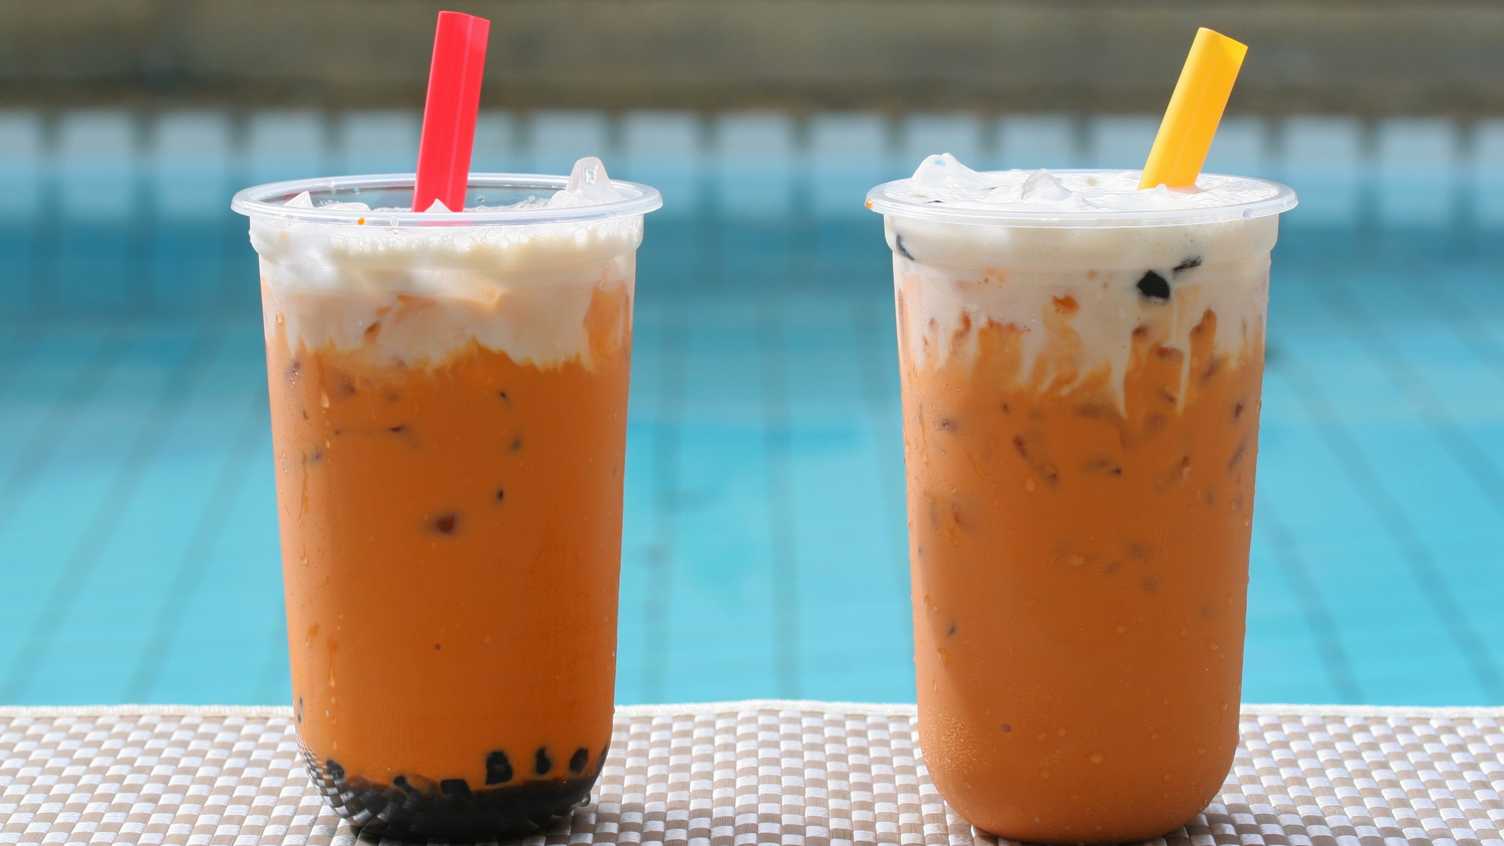 Easy Thai Milk Tea Recipe (Cha Yen) & Boba - Thai Bubble Tea